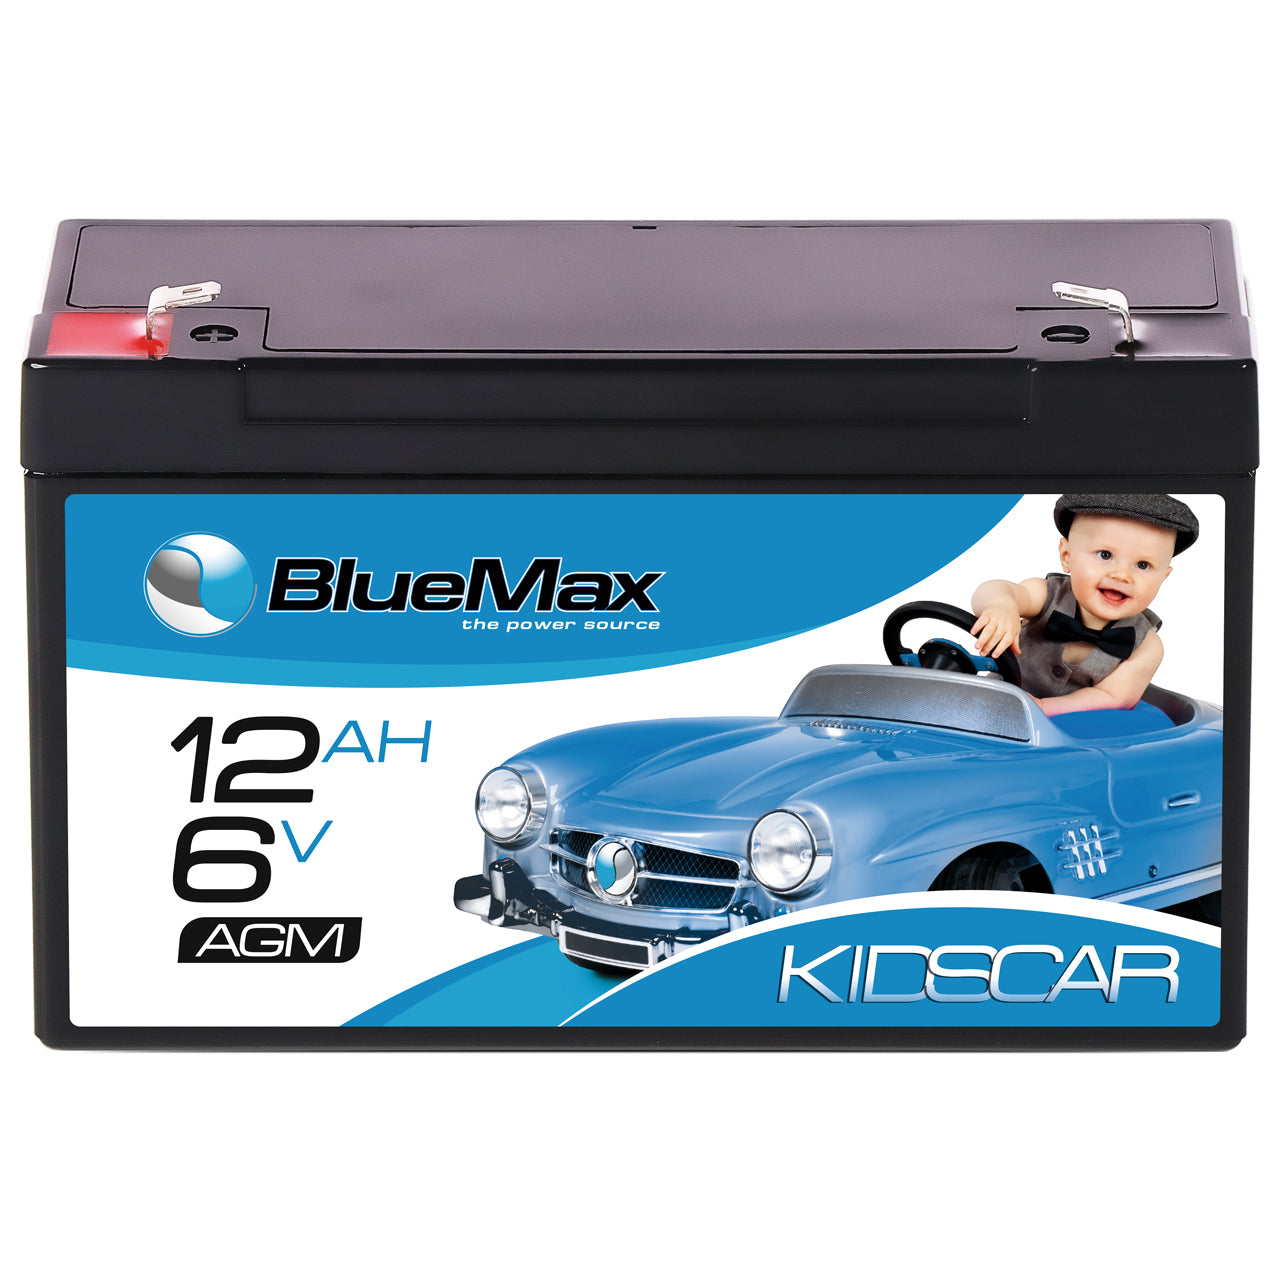 BLUEMAX KidsCar AGM 6V 12Ah